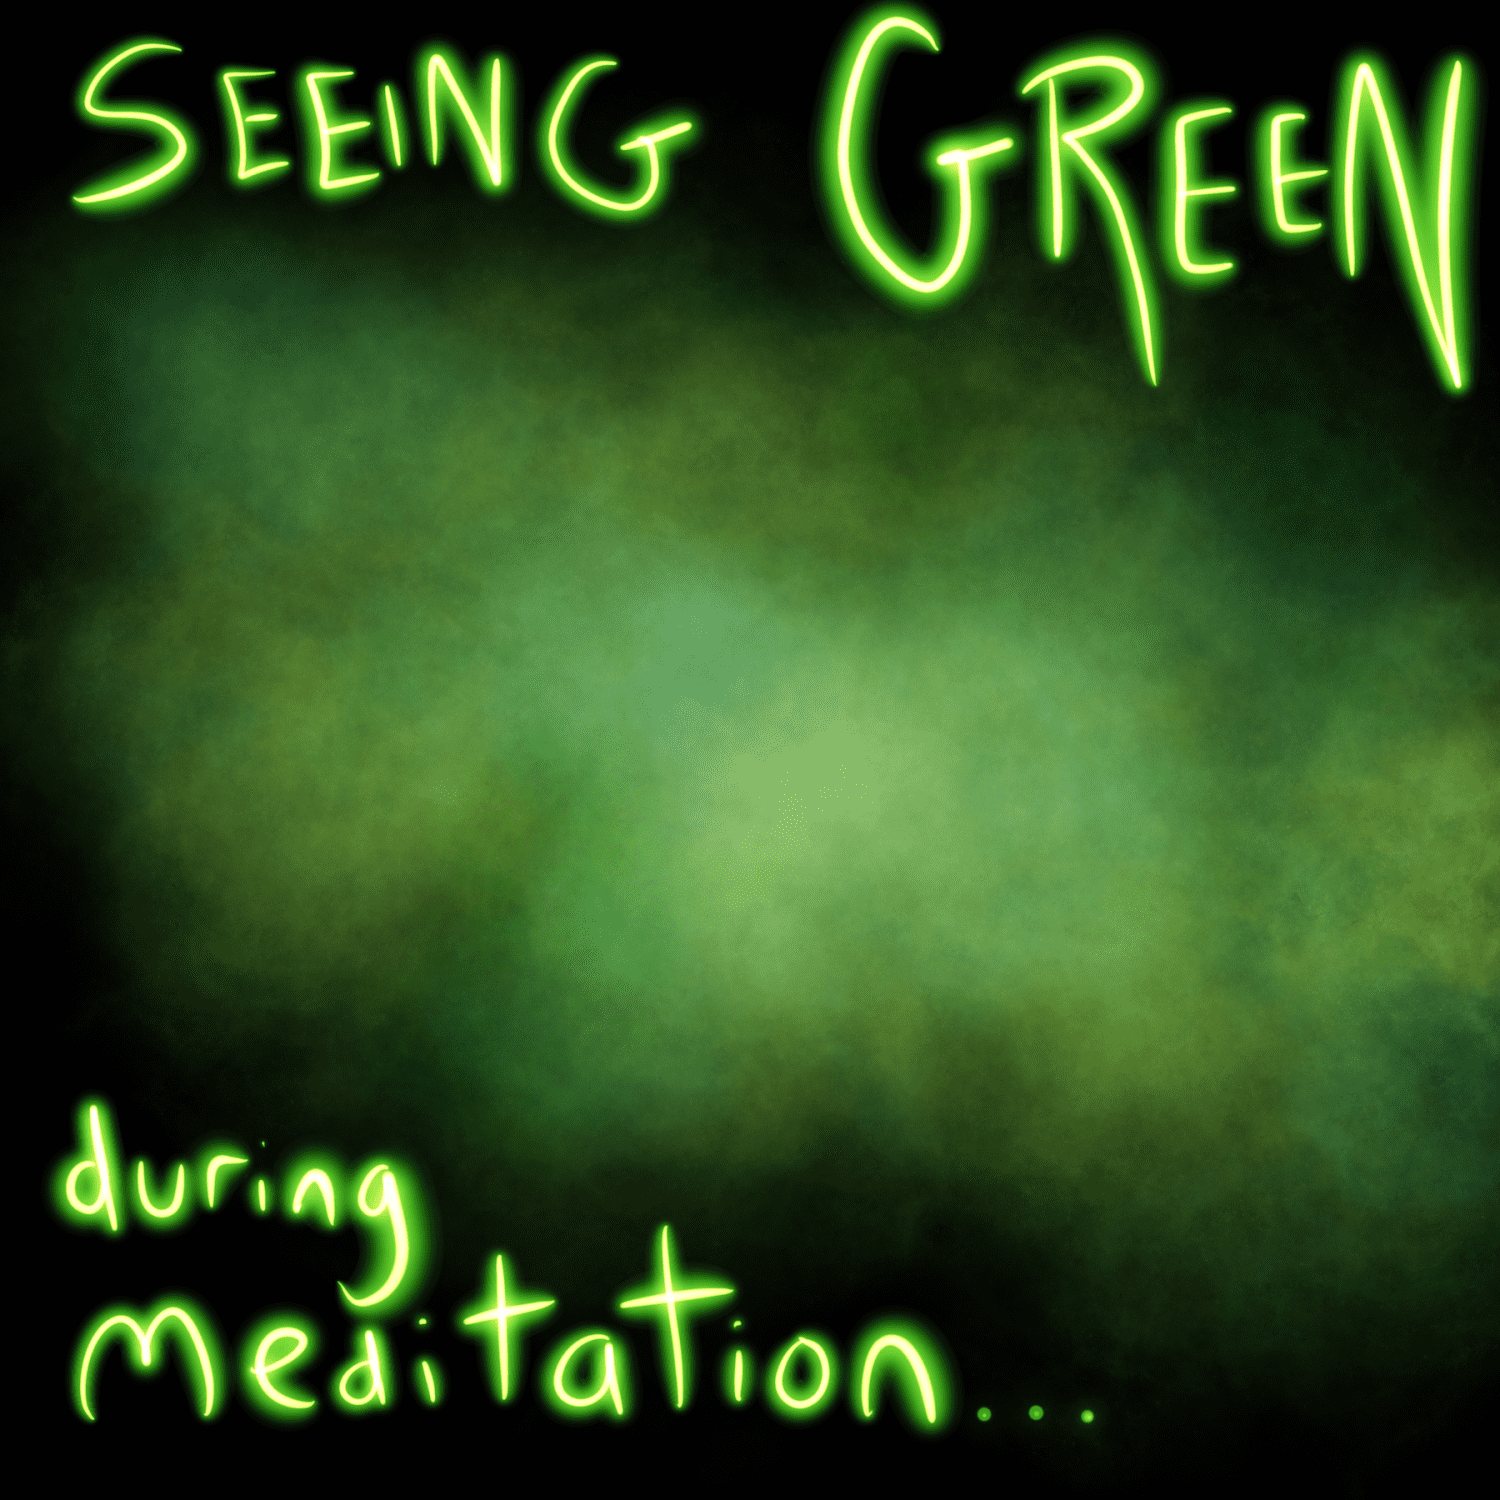 Seeing green chakra